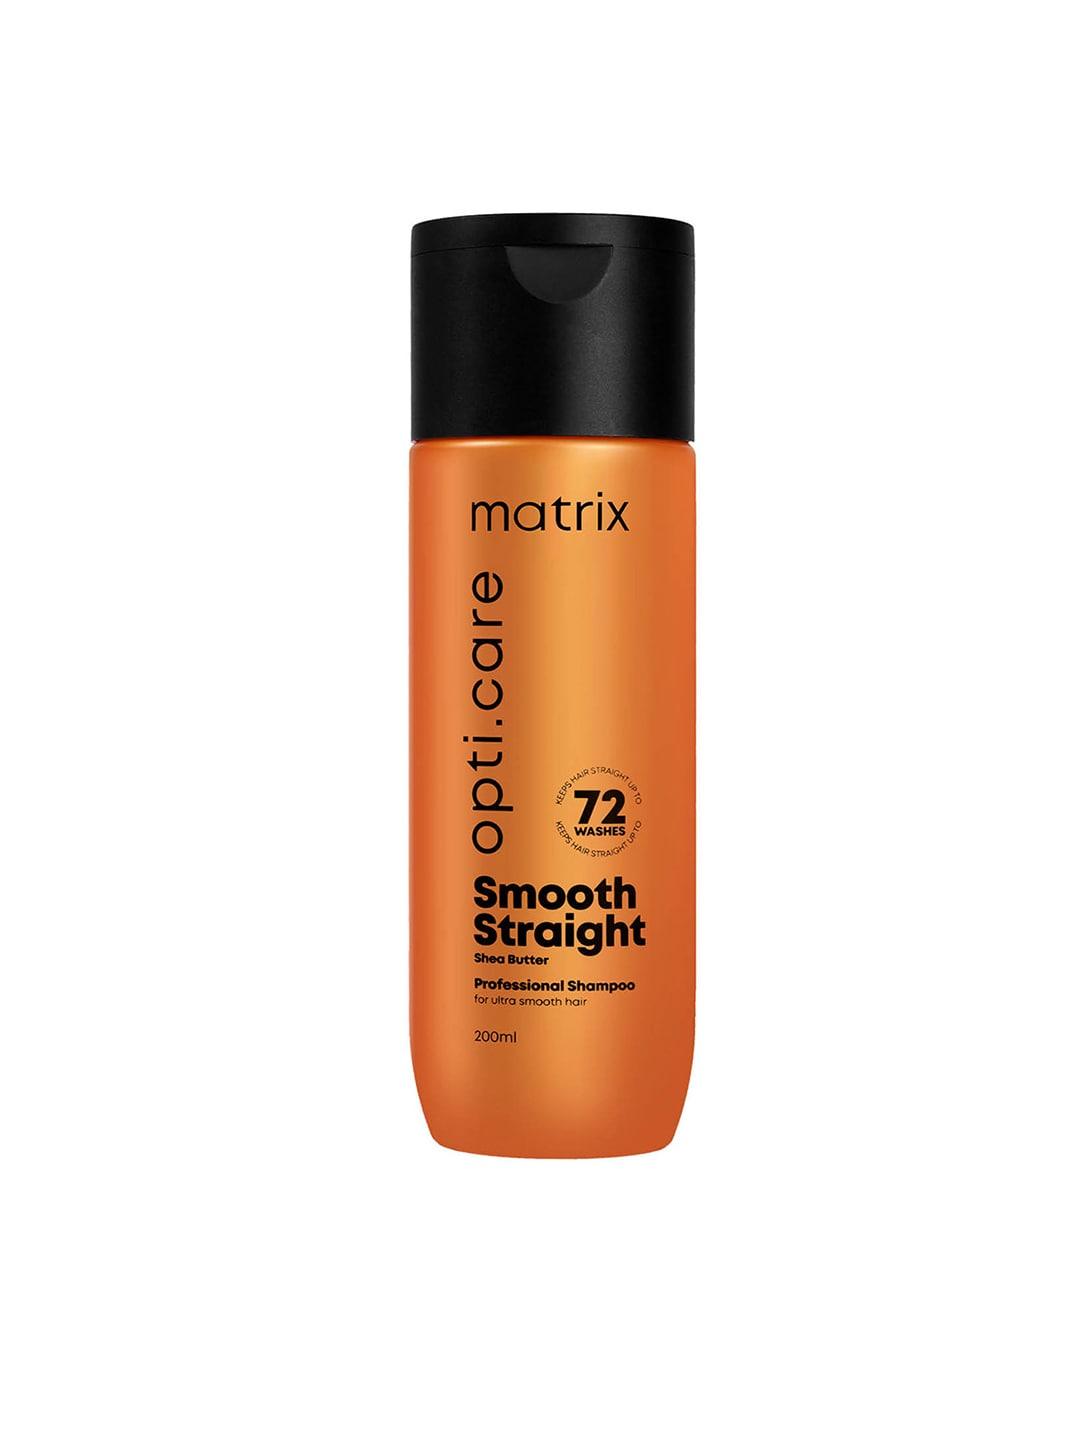 MATRIX Opti Care Smooth Straight Professional Shampoo with Shea Butter - 200ml